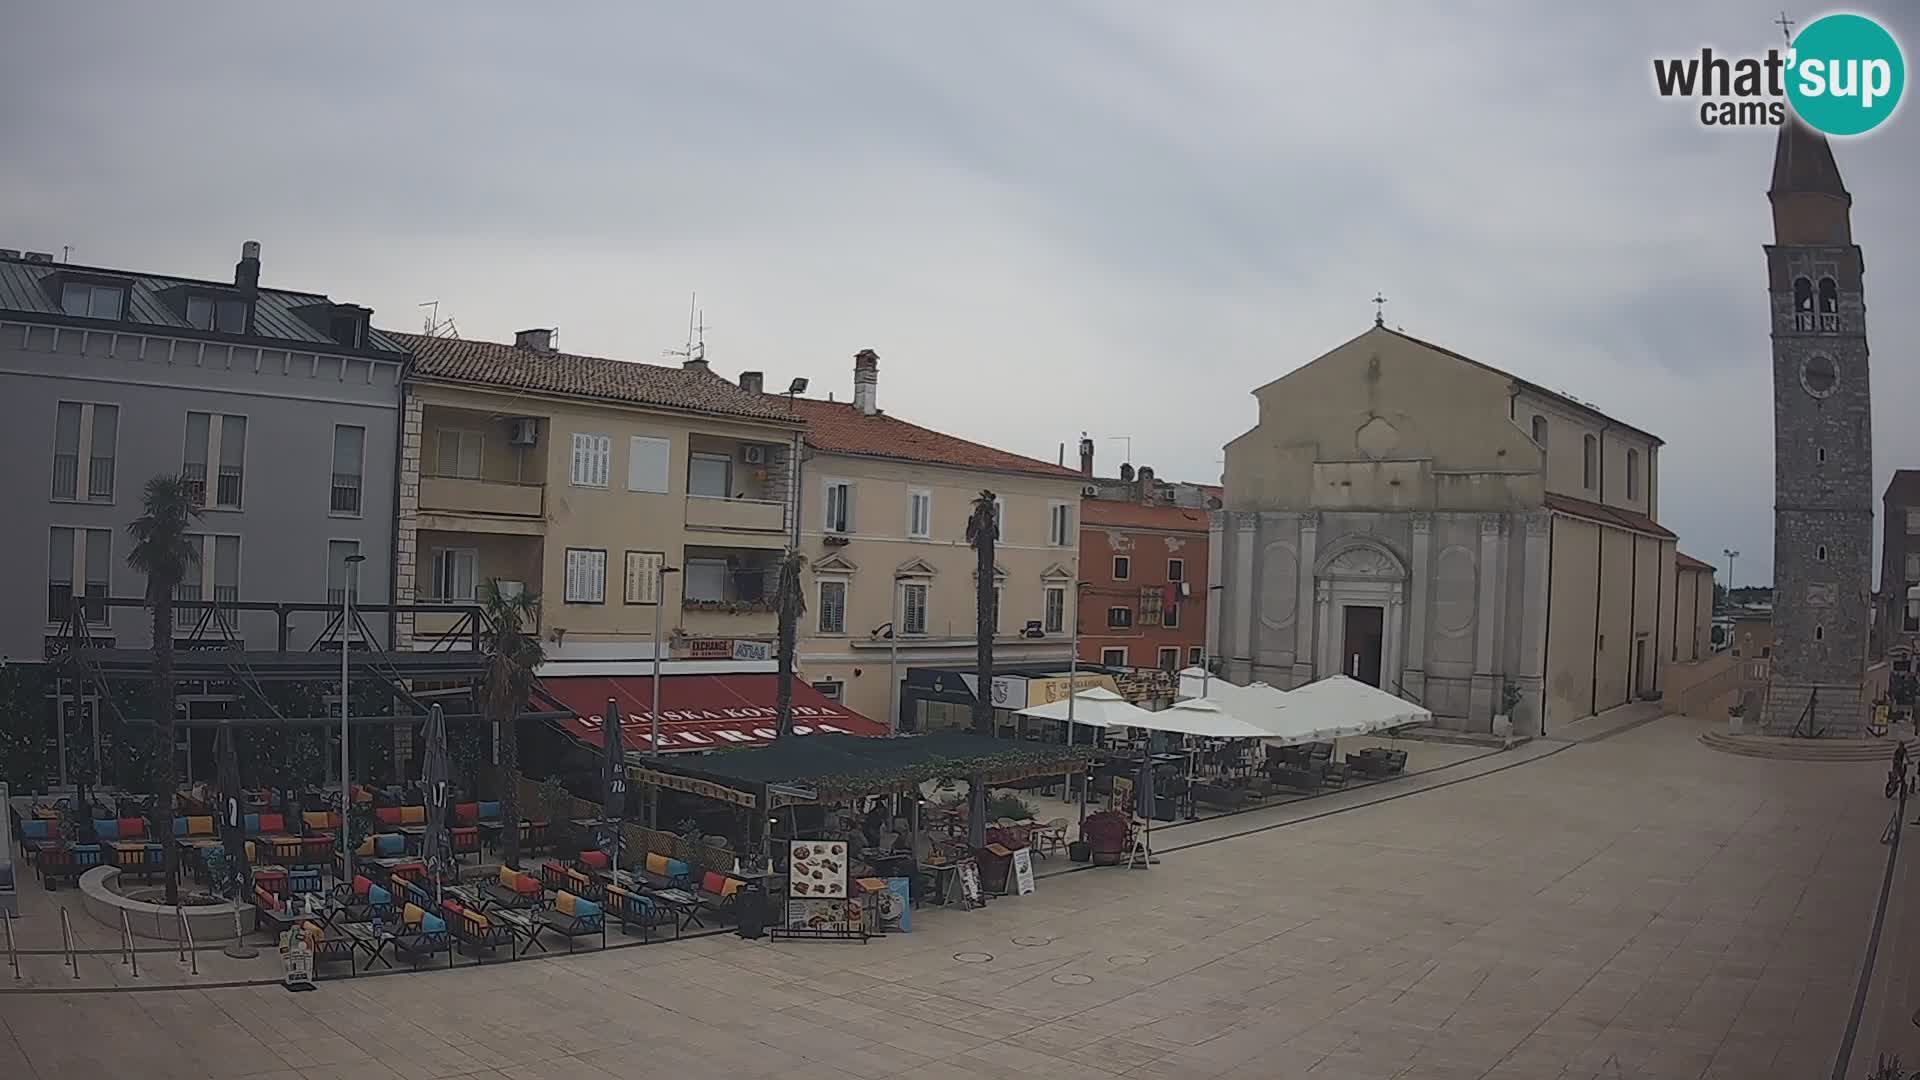 Webcam – Piazza centrale di Umago